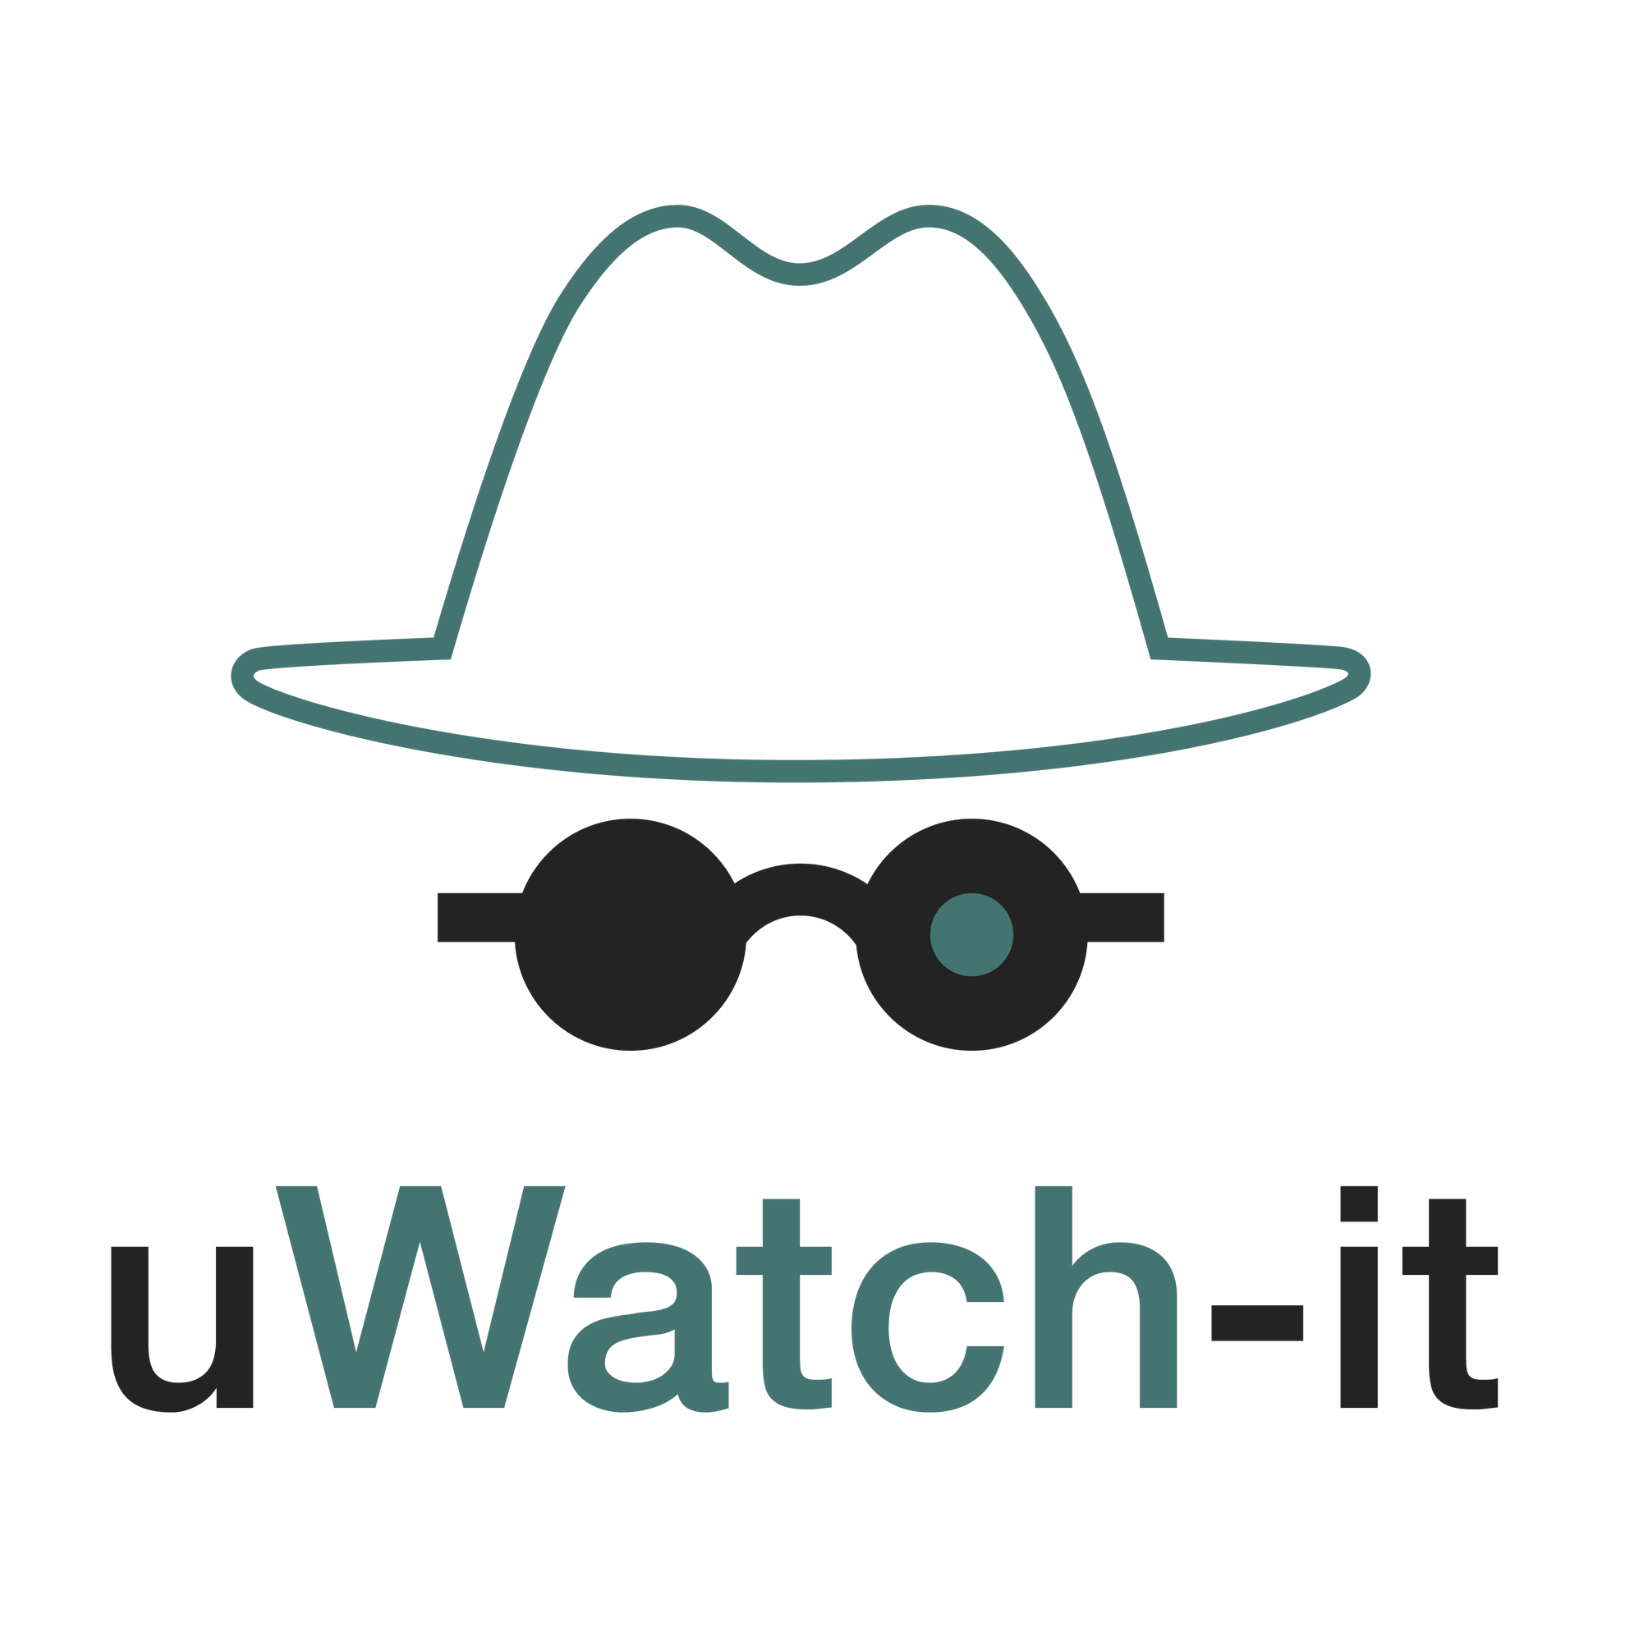 uWatch-it